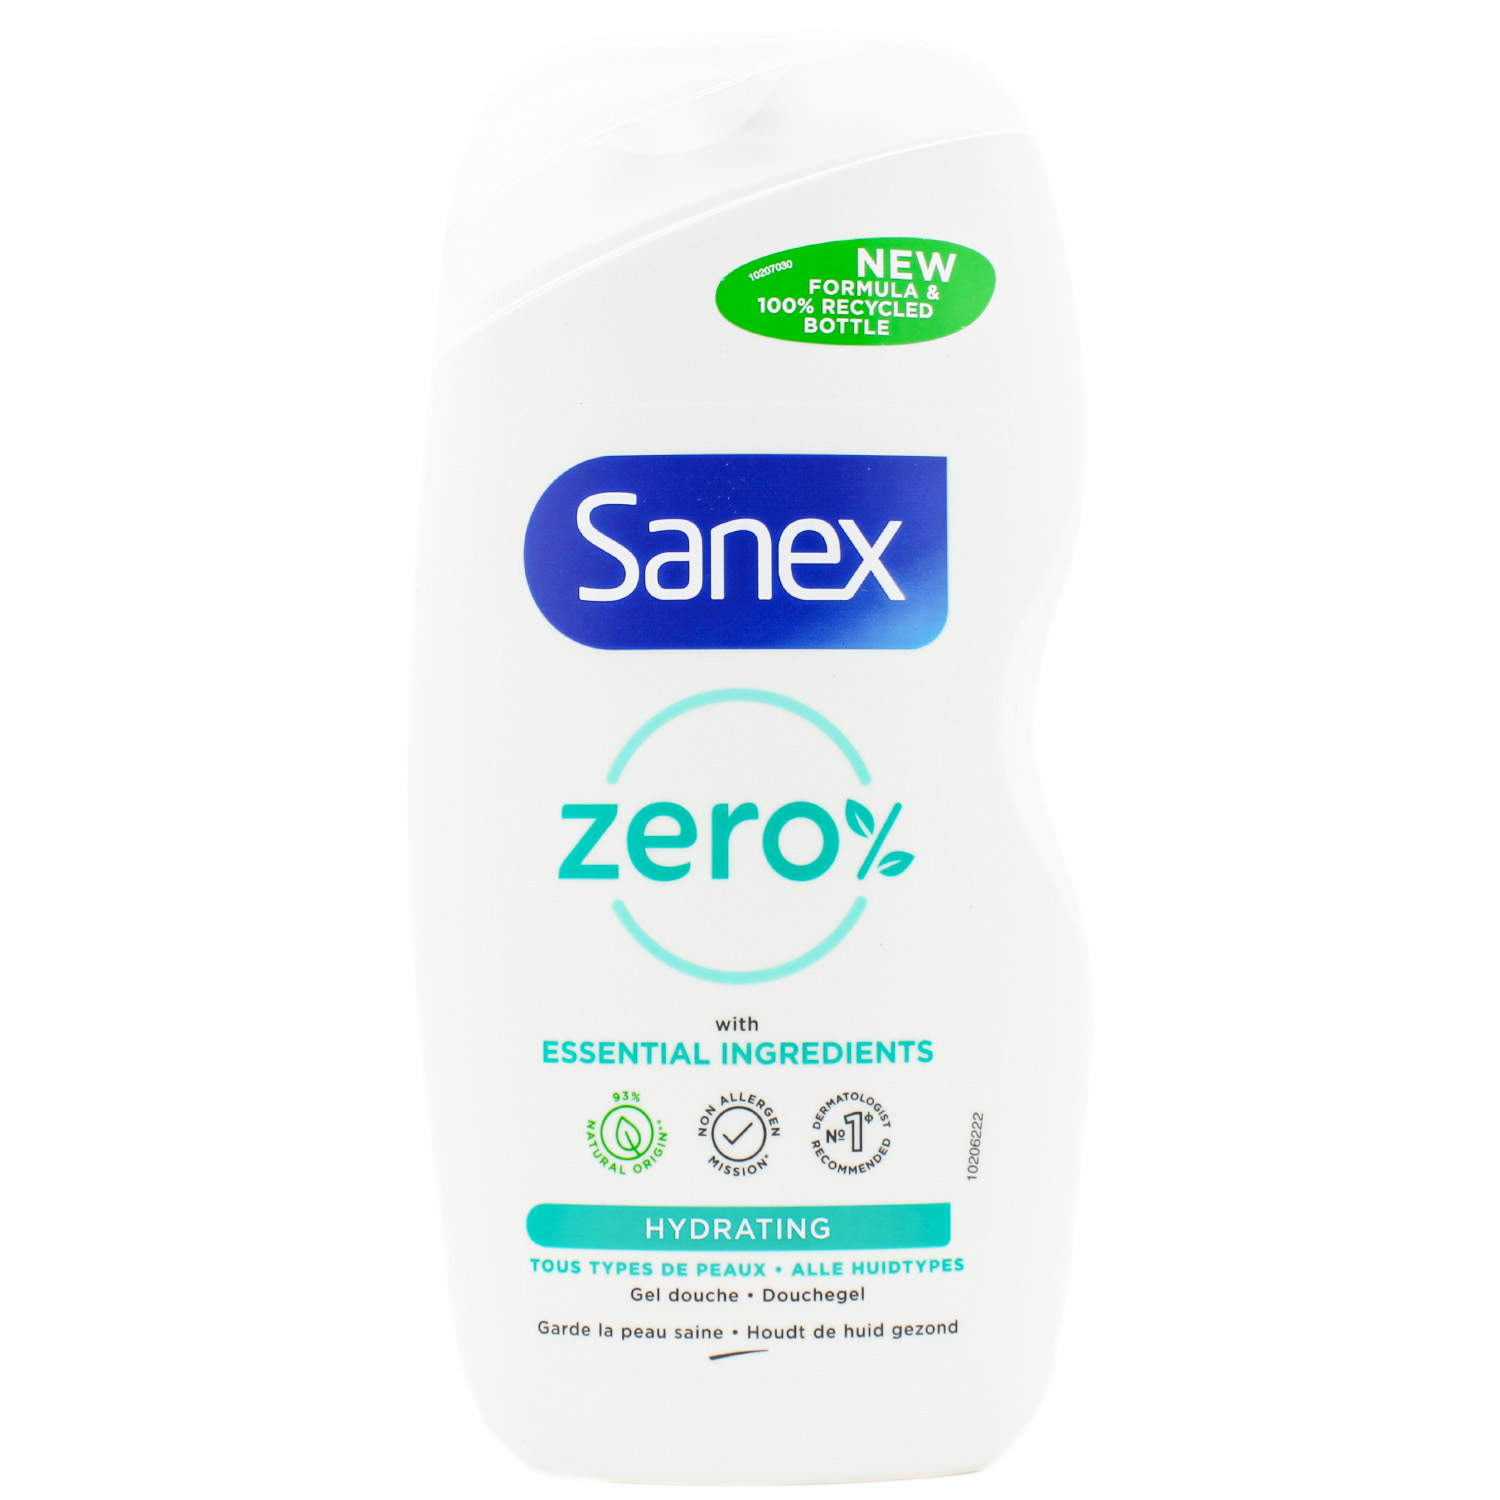 Sanex Zero% Hydrating Shower Gel 500ml